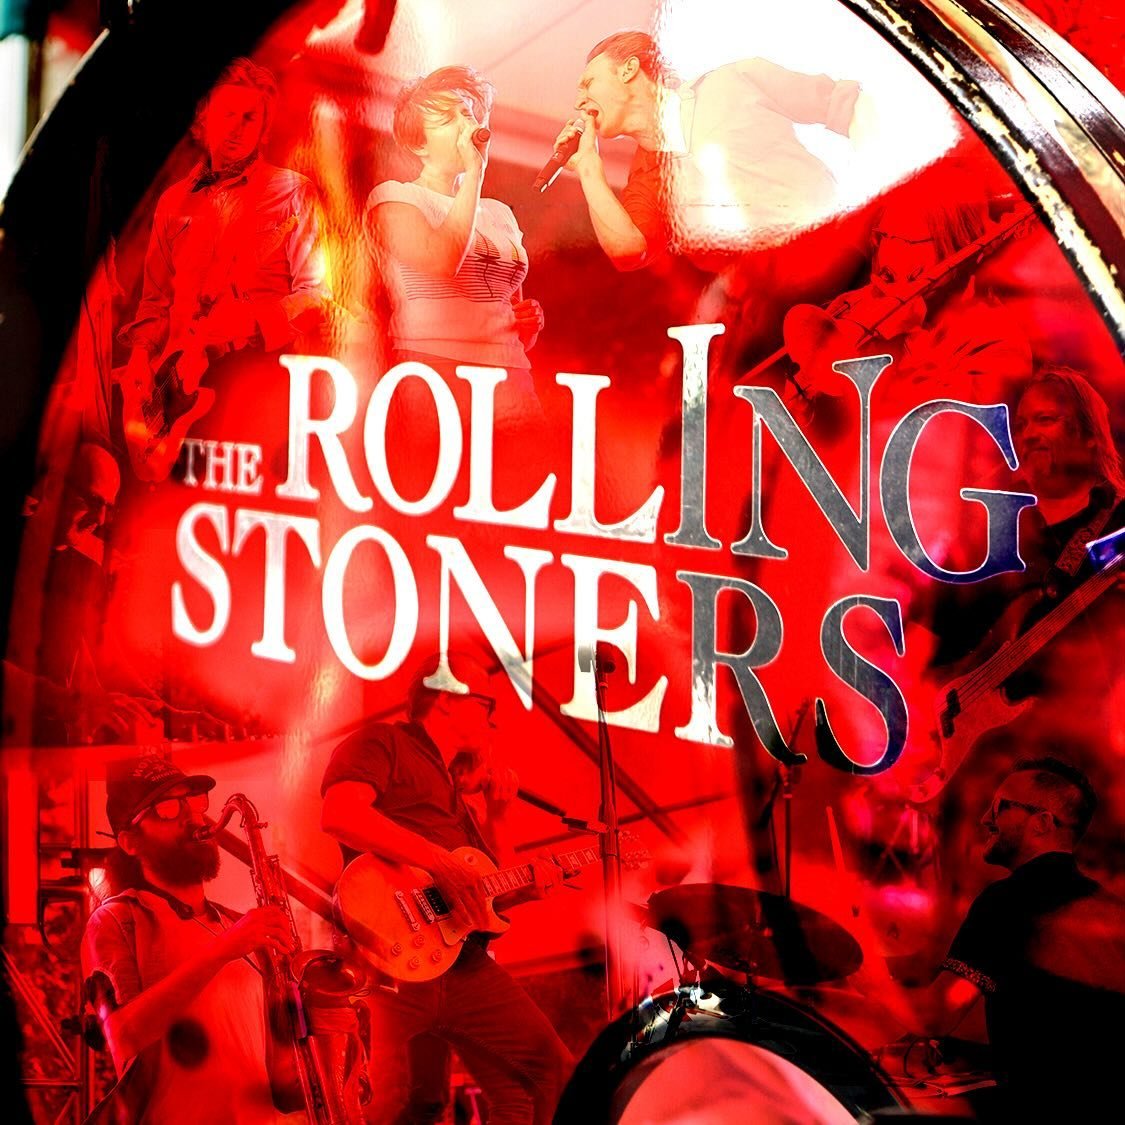 Stoners. Green Room. 4/20. It's highly anticipated. 😎
.
.
.
.
#recordstoreday #therollingstones #itsonlyrocknroll #fullalbum #rollingstoners @greenroommpls @threadfindsmpls @jordan_oliver_art